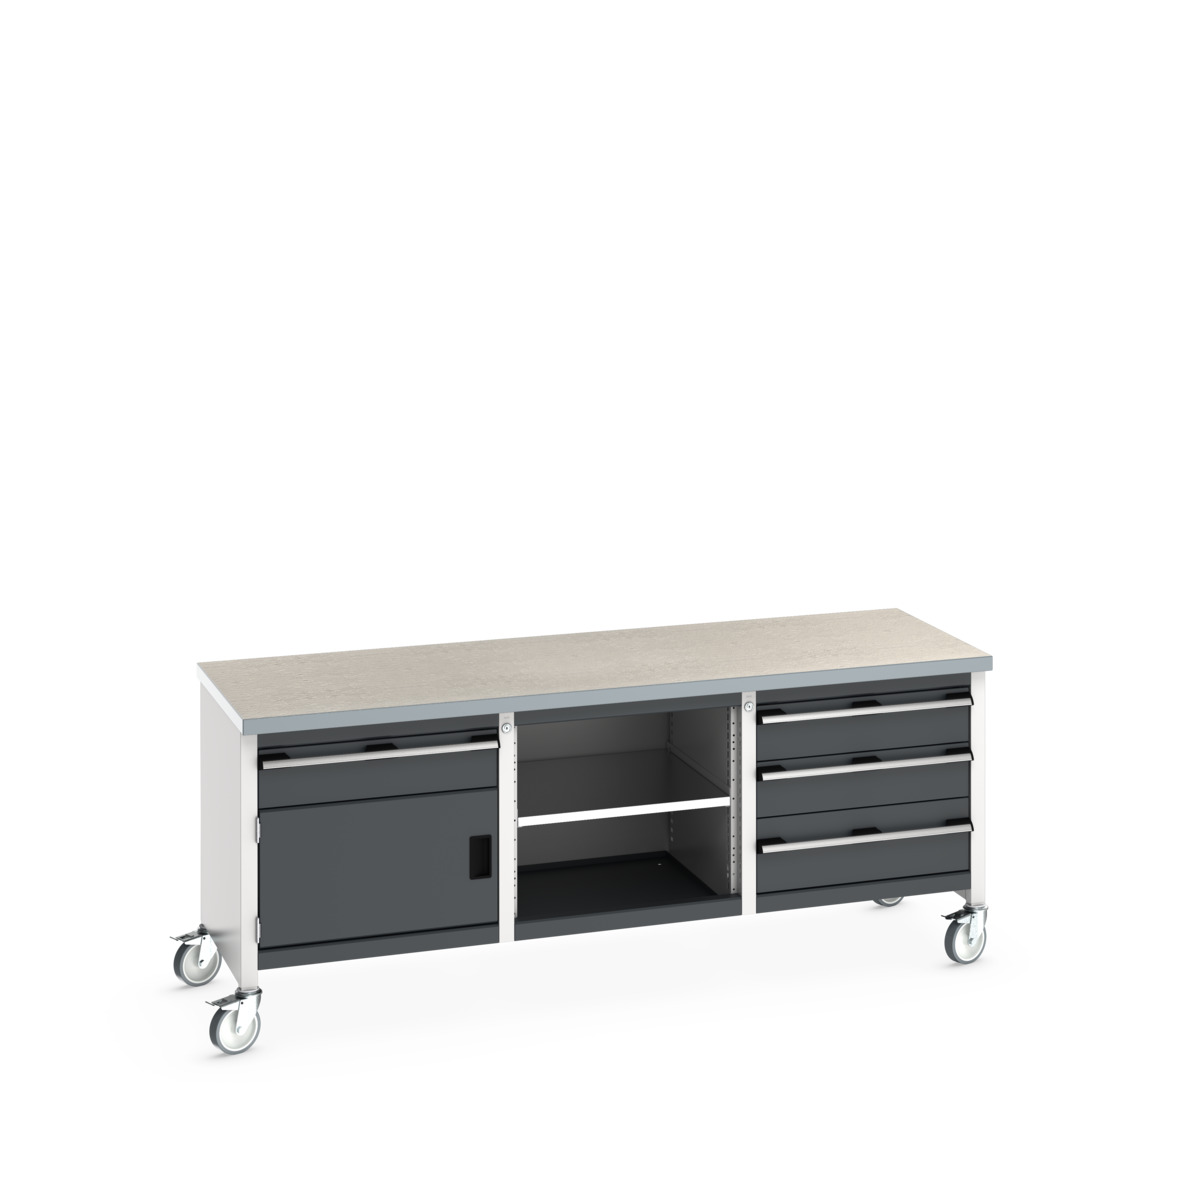 41002129. - cubio mobile storage bench (lino)